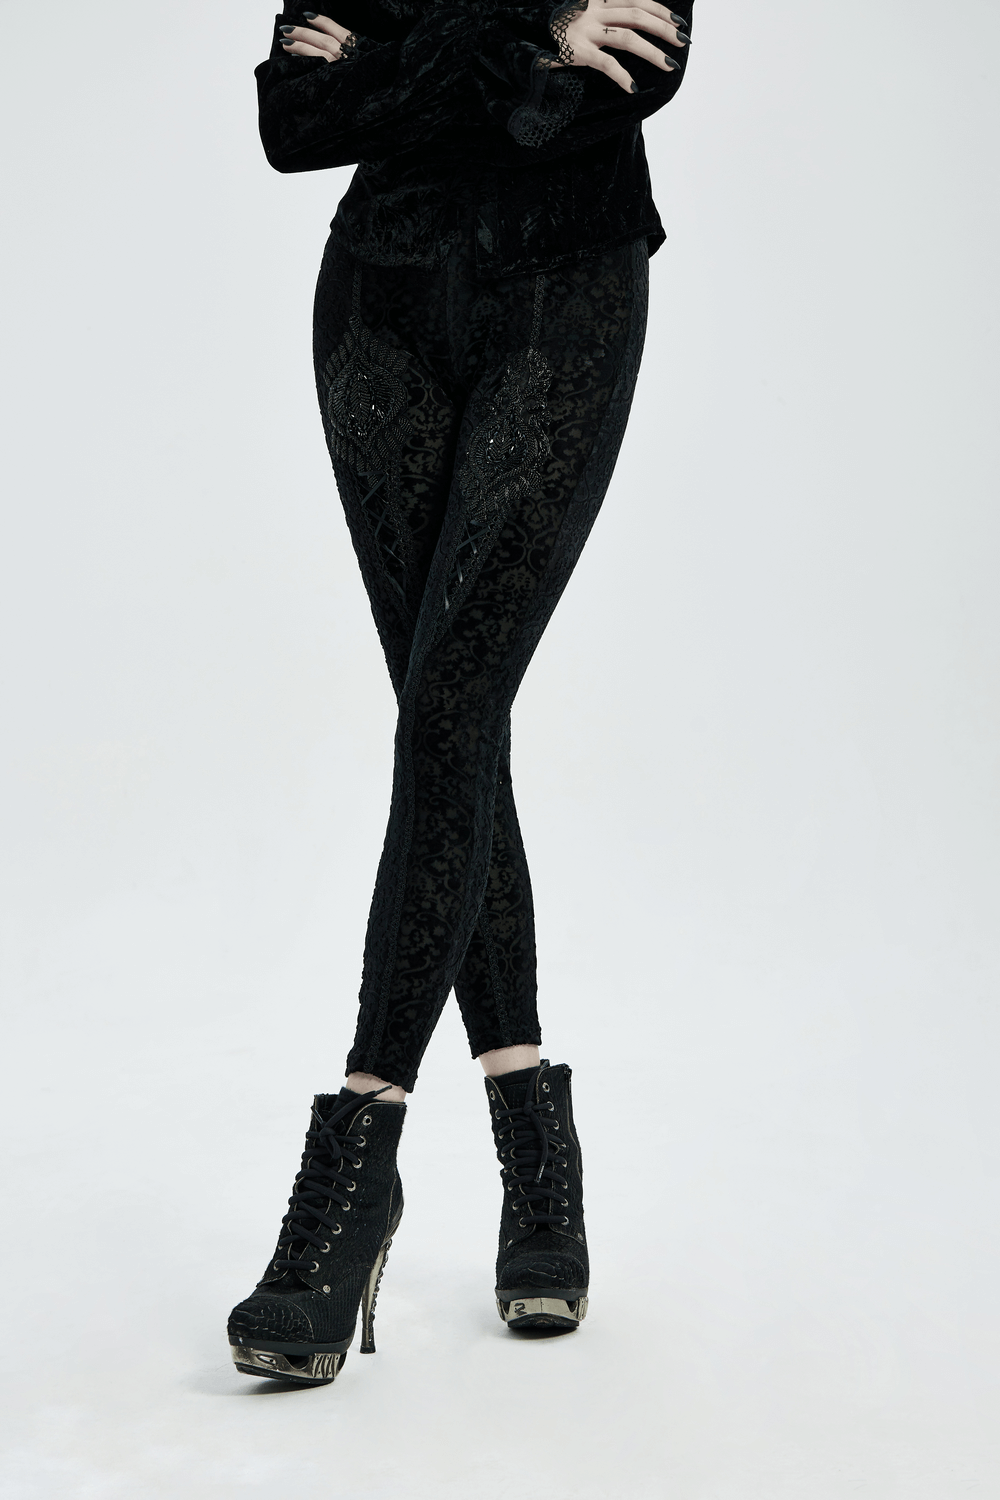 Black Gothic Velvet Leggings with Floral Lace Detail